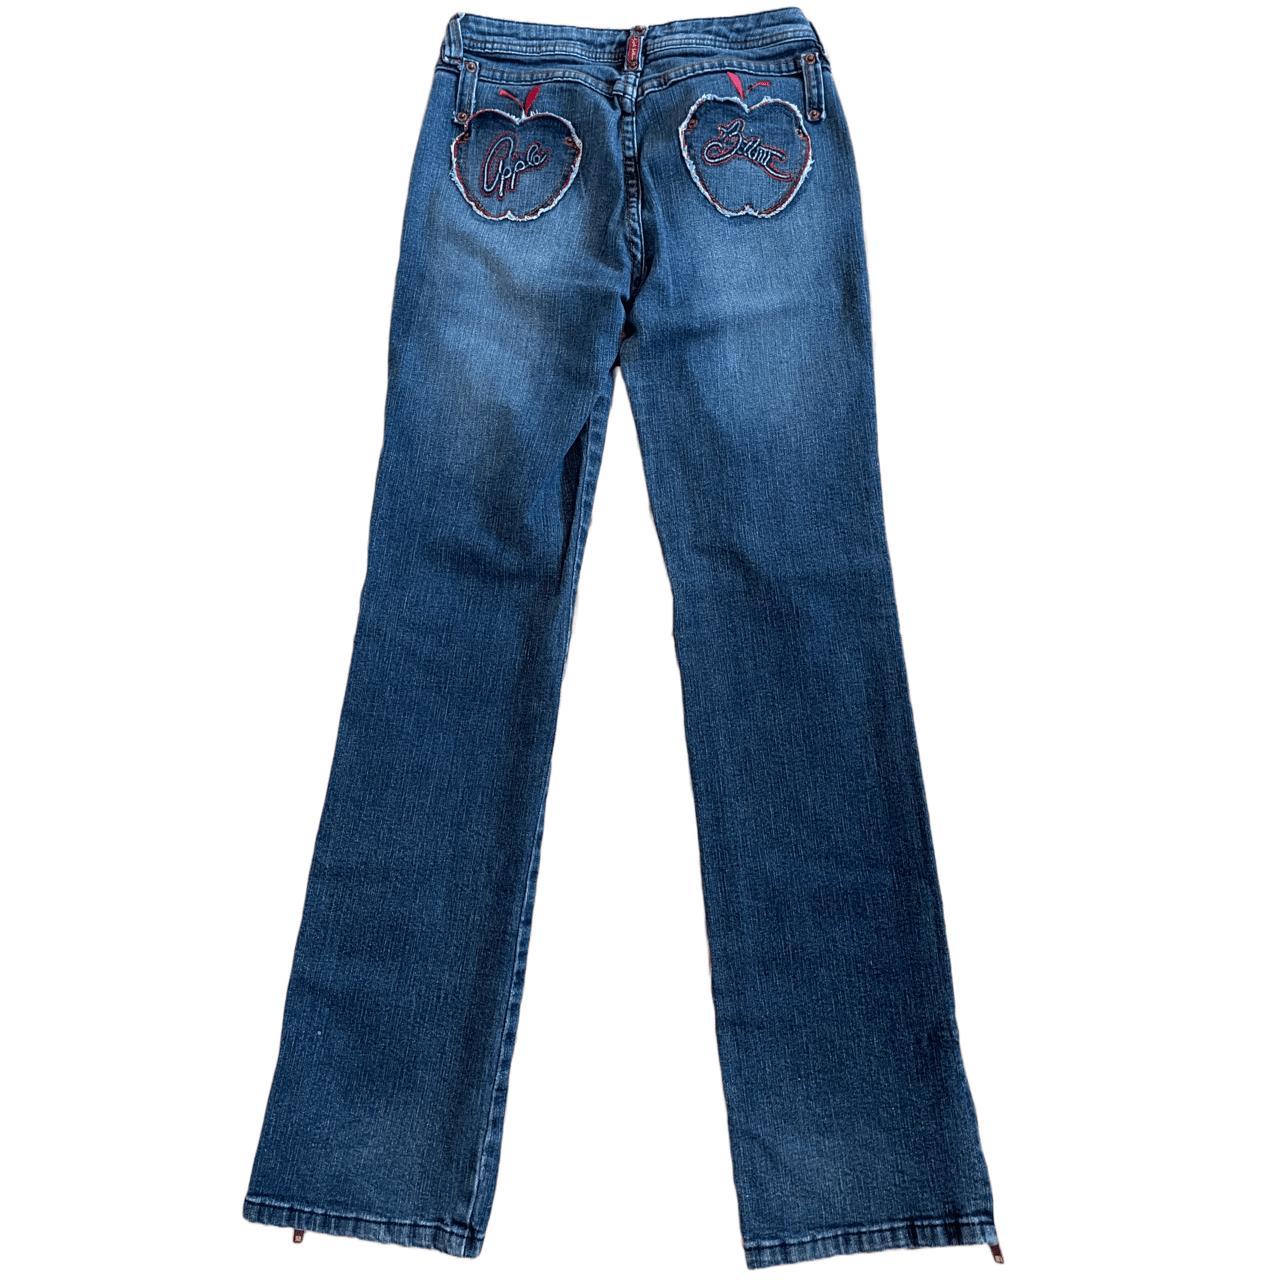 Zipper leg Apple Bottom Jeans The details on these... - Depop